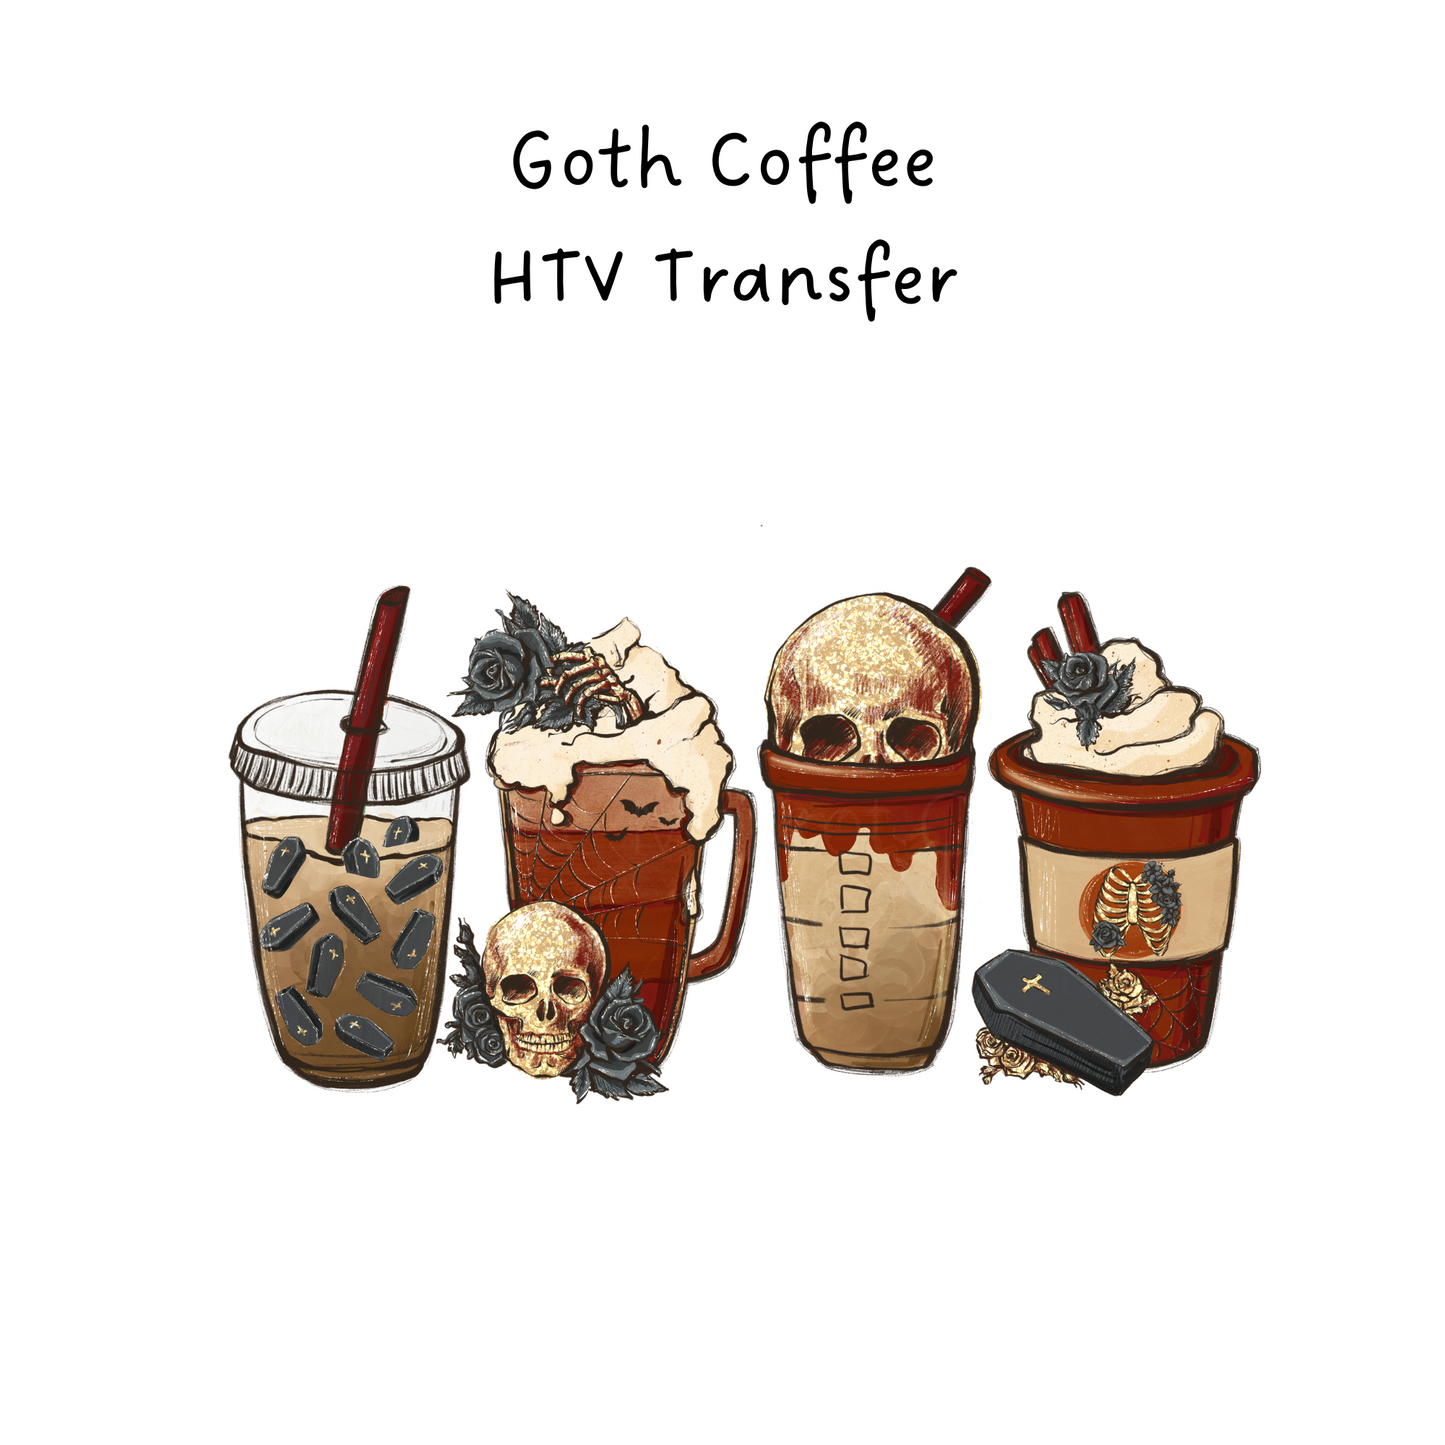 Goth Coffee HTV Transfer